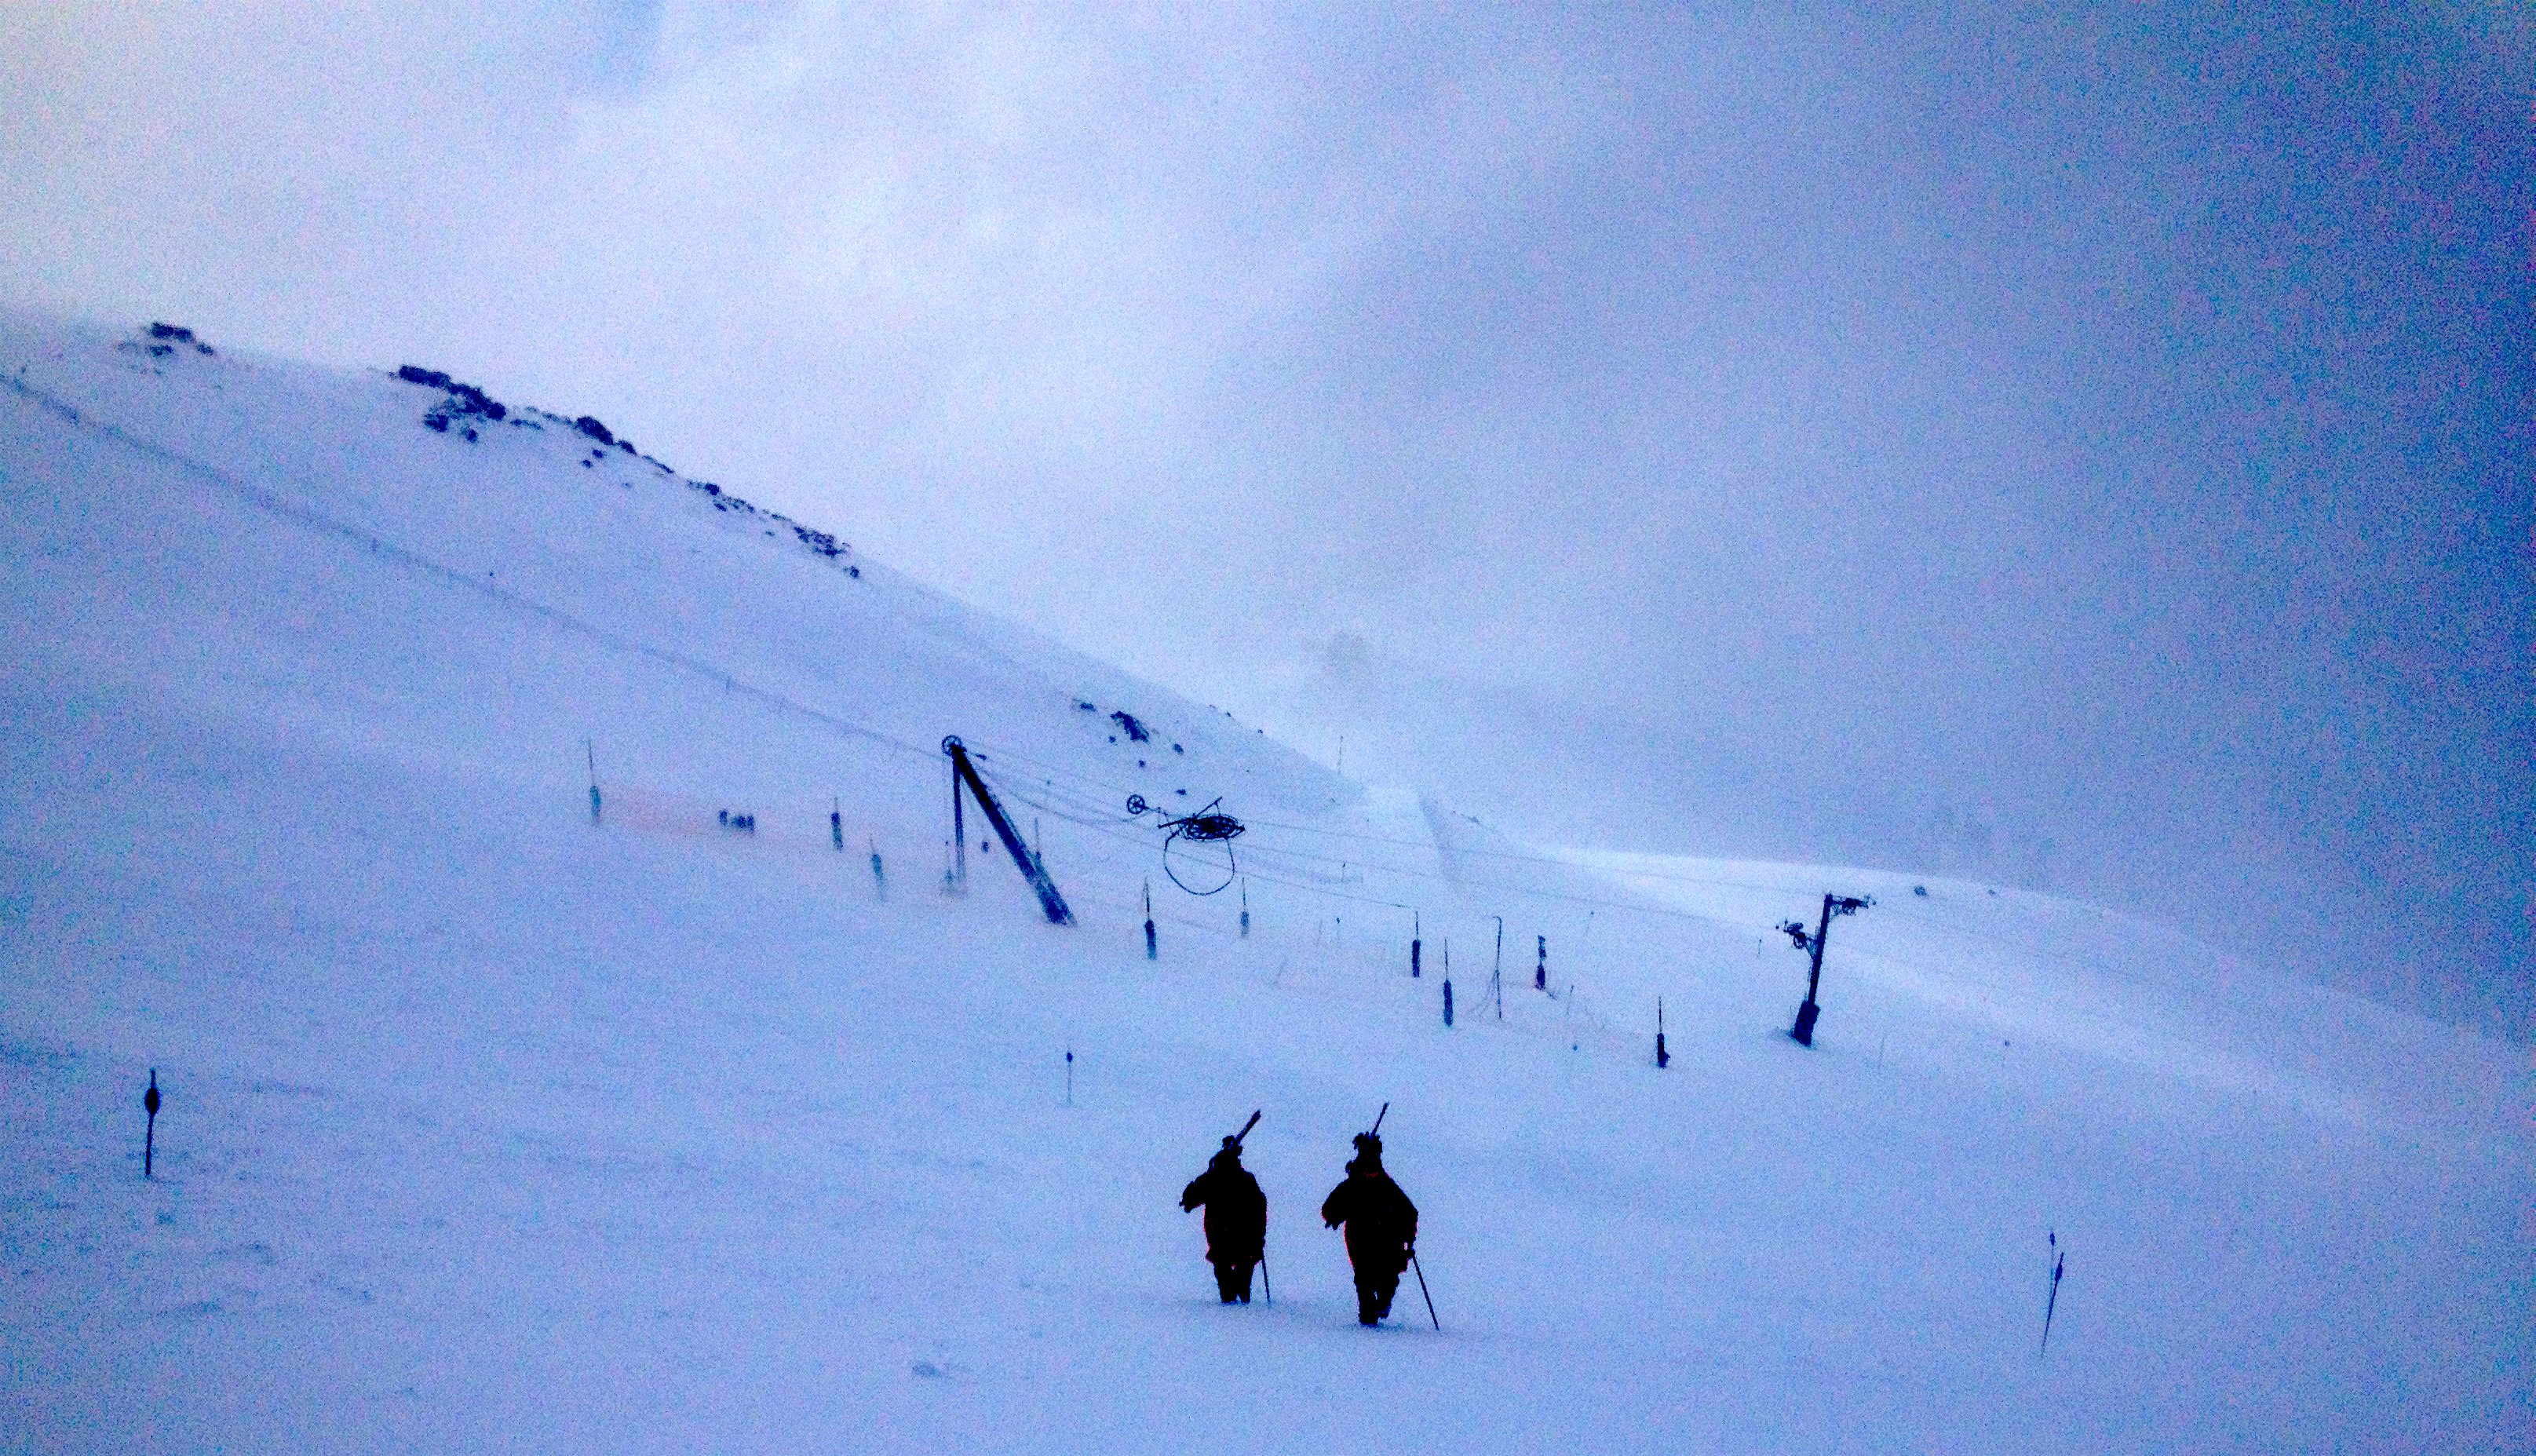 Ski patrol badasses today. photo: miles clark/snowbrains